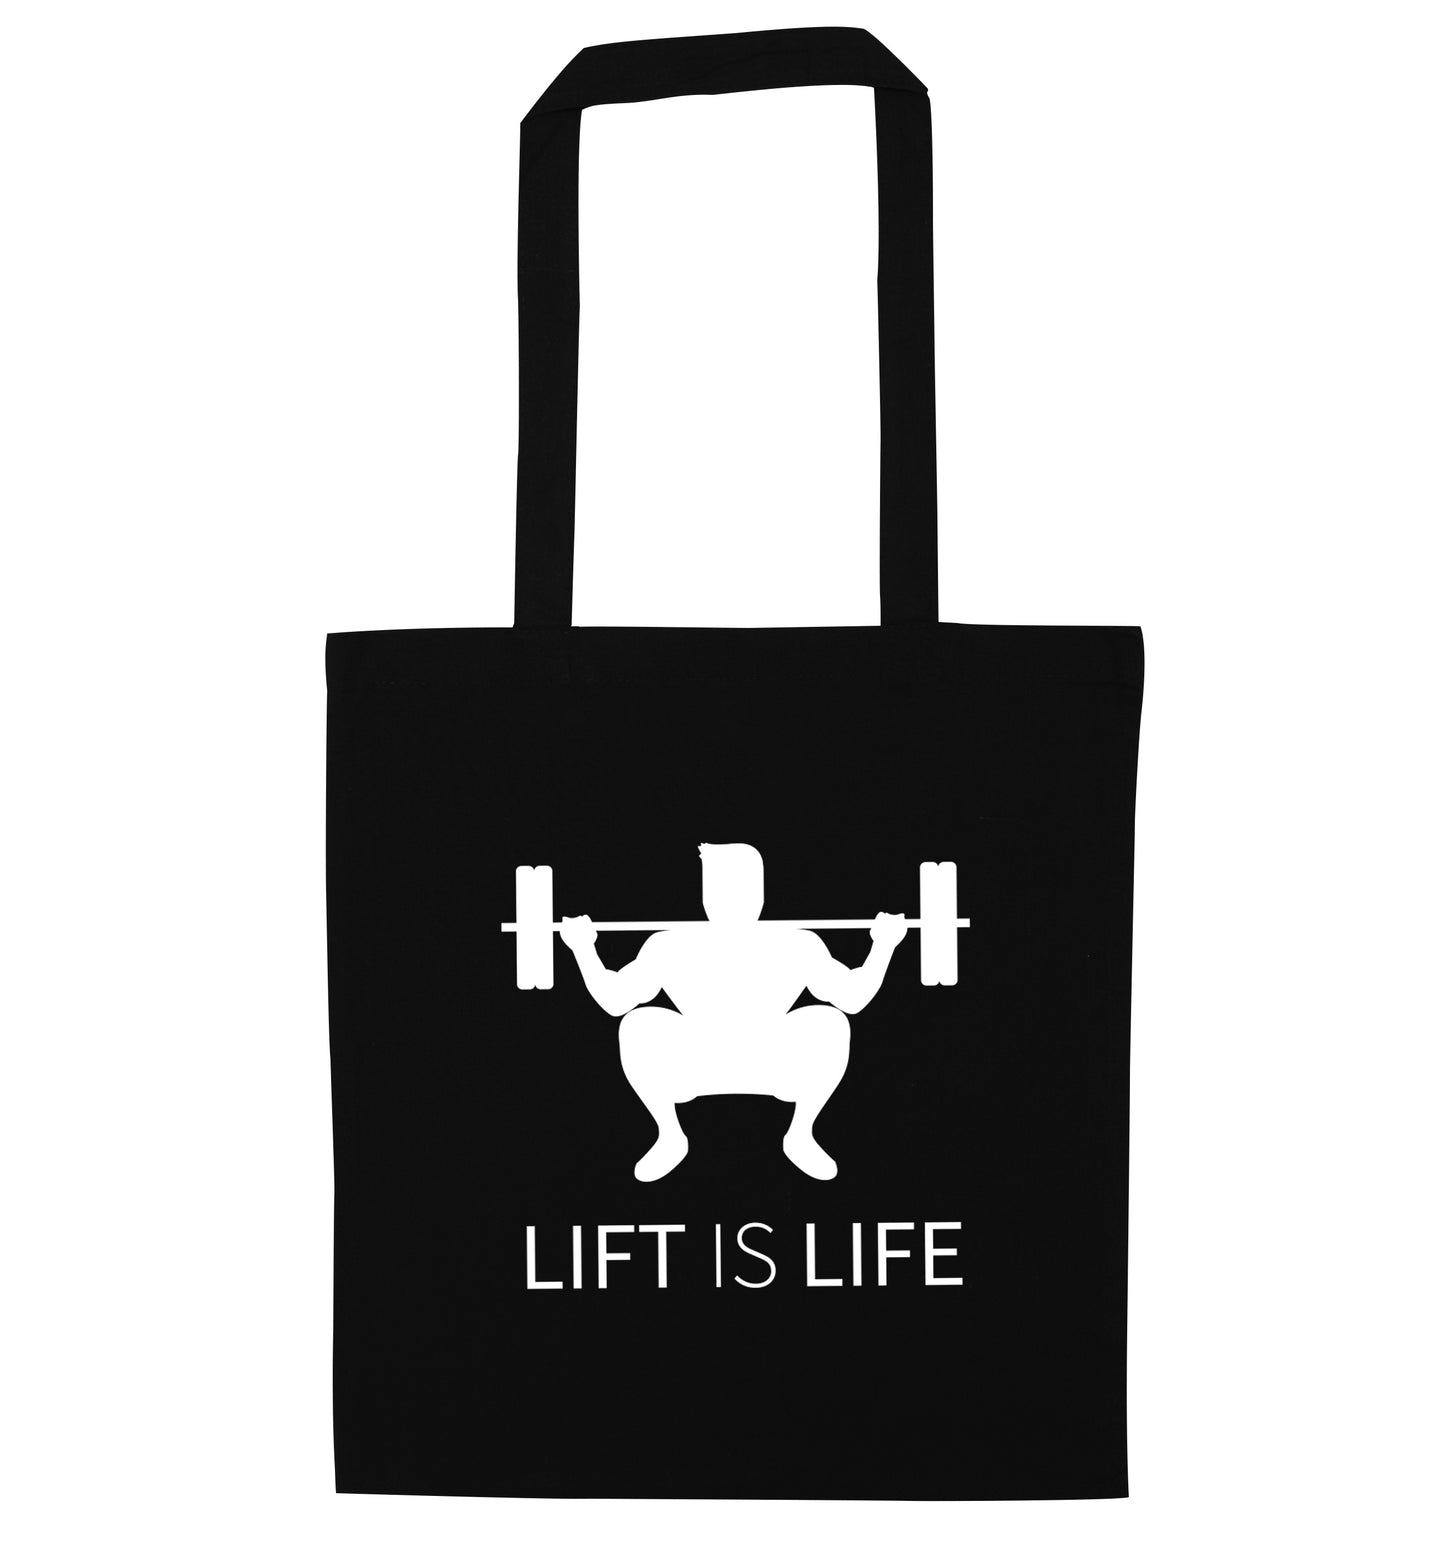 Lift is life black tote bag